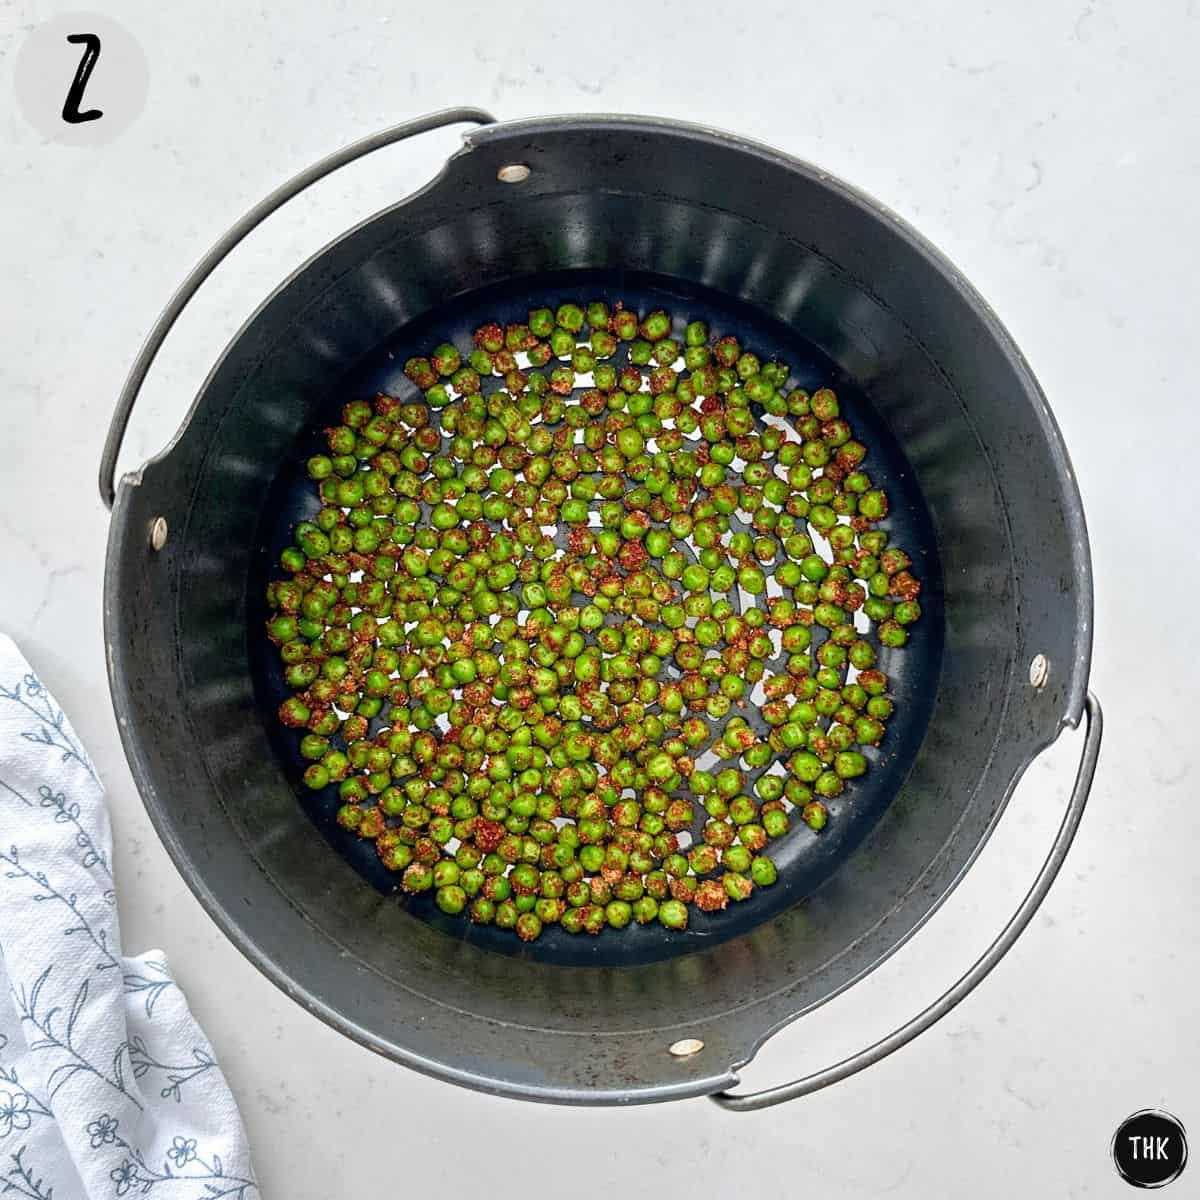 Seasoned peas in a single layer inside air fryer basket.